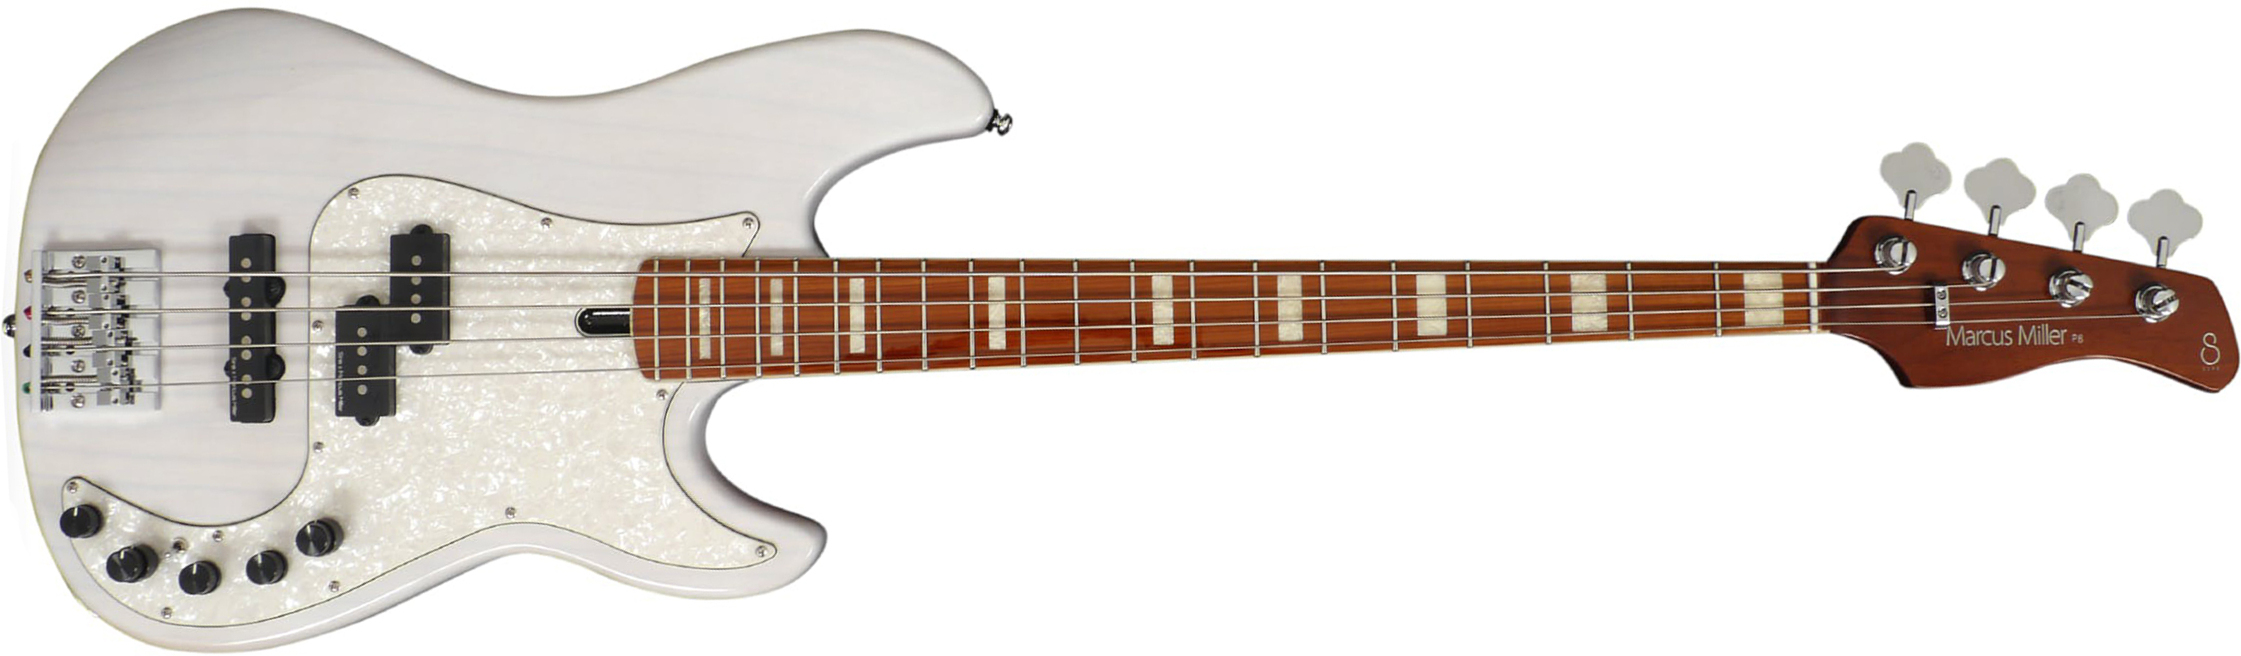 Marcus Miller P8 4st Active Mn - White Blonde - Solid body elektrische bas - Main picture